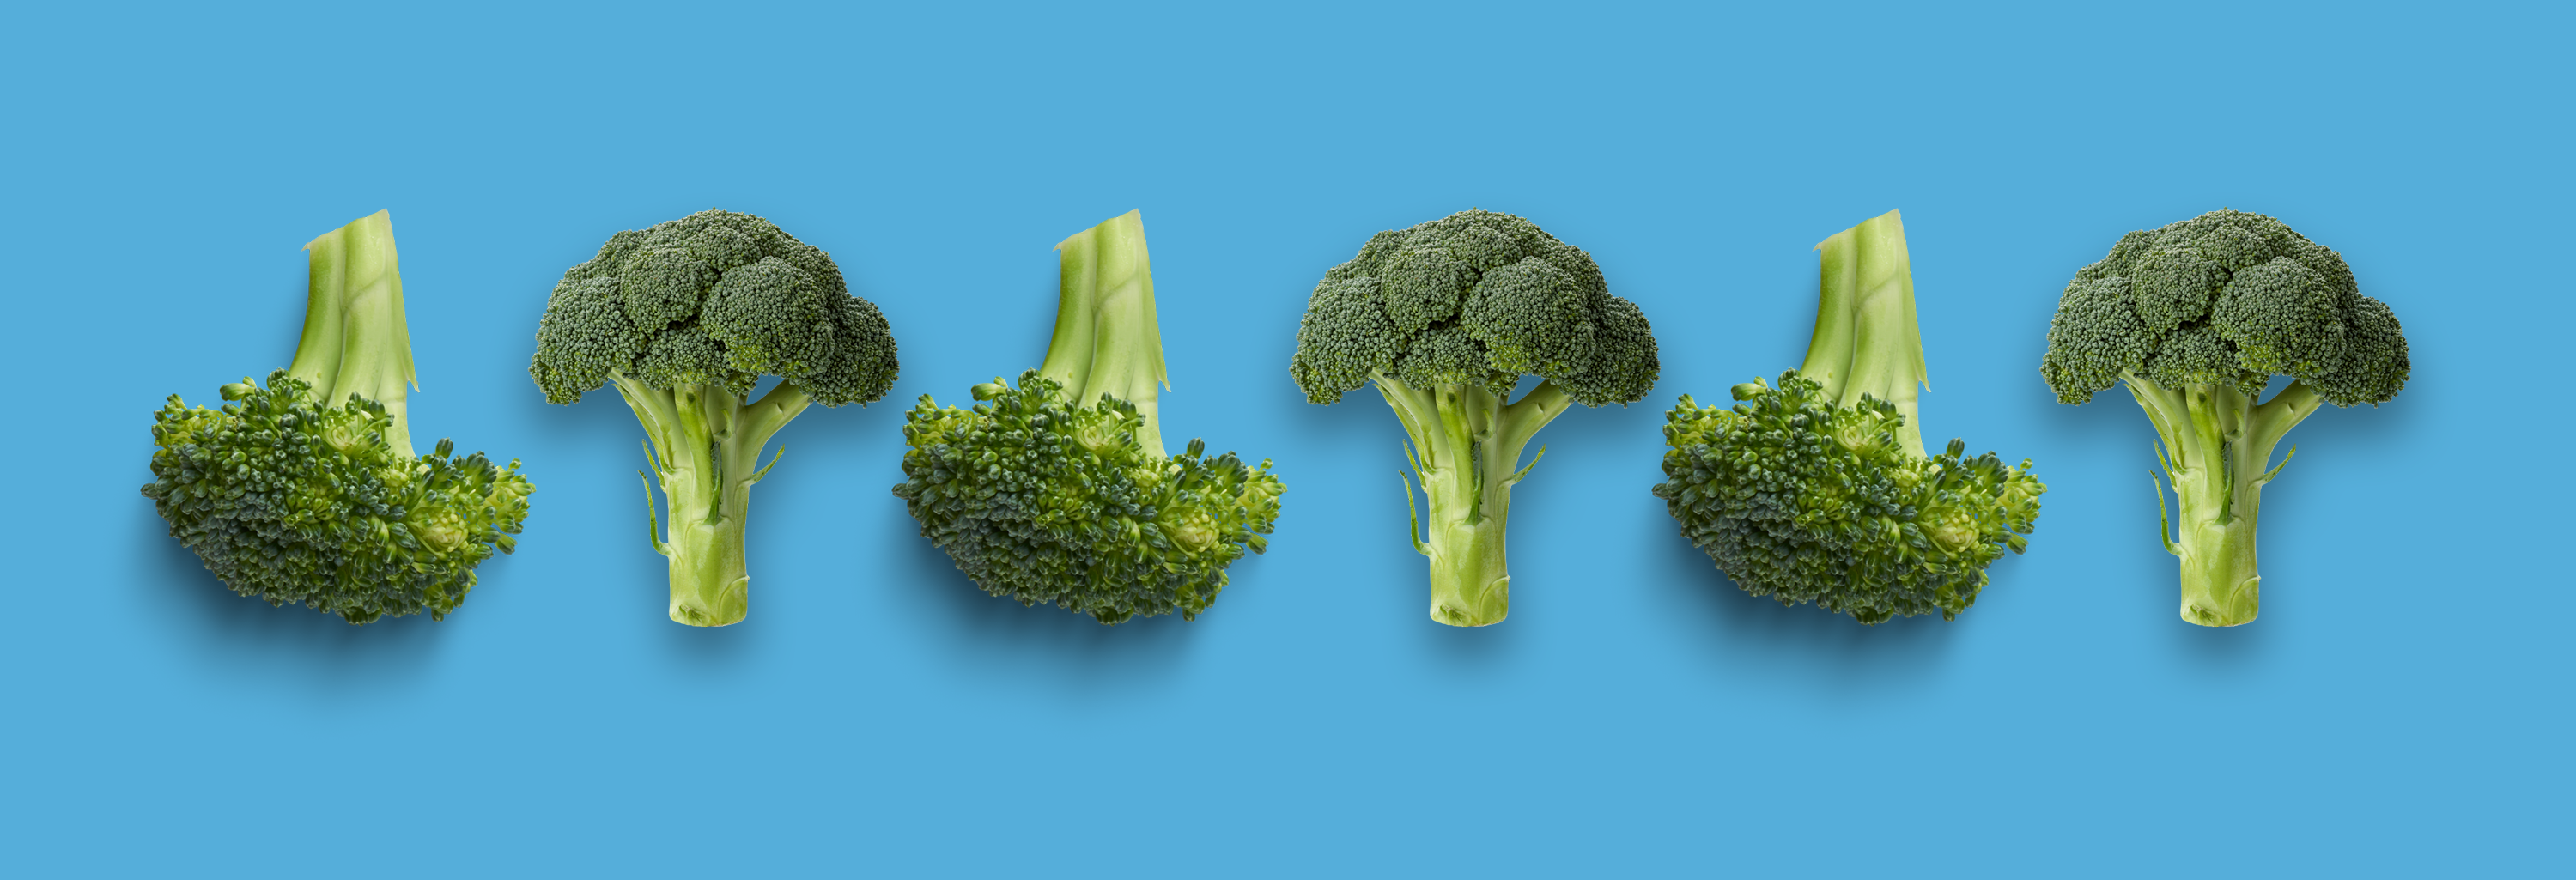 Broccoli on blue background